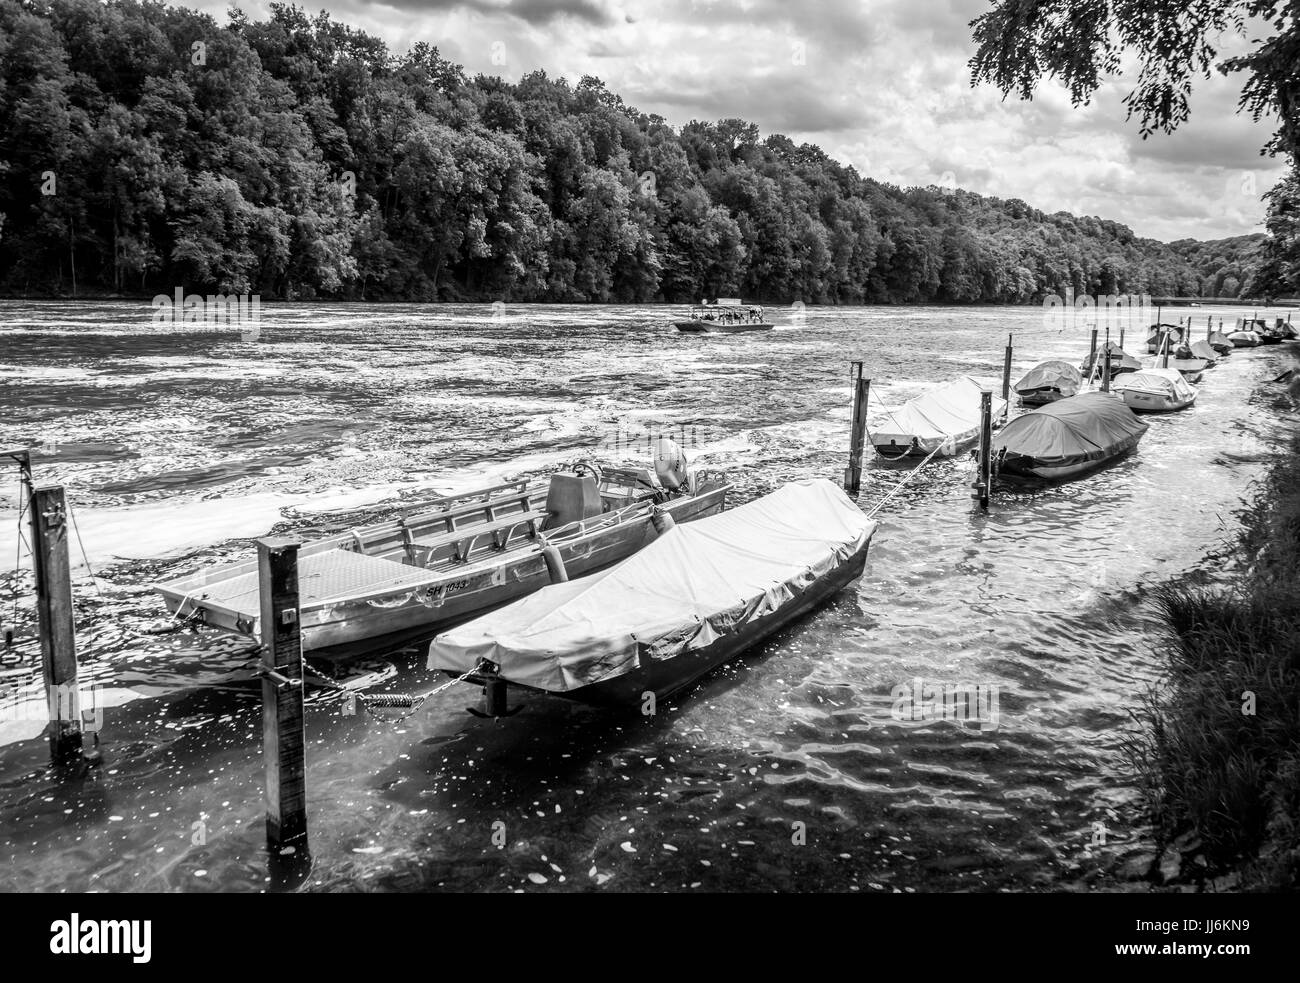 Boats in Rows on the Rhine river near the Rhinefalls, Schaffhausen, Switzerland. Sony Alpha 7 MK II f/6.3 1/1600s ISO1000 28mm Stock Photo